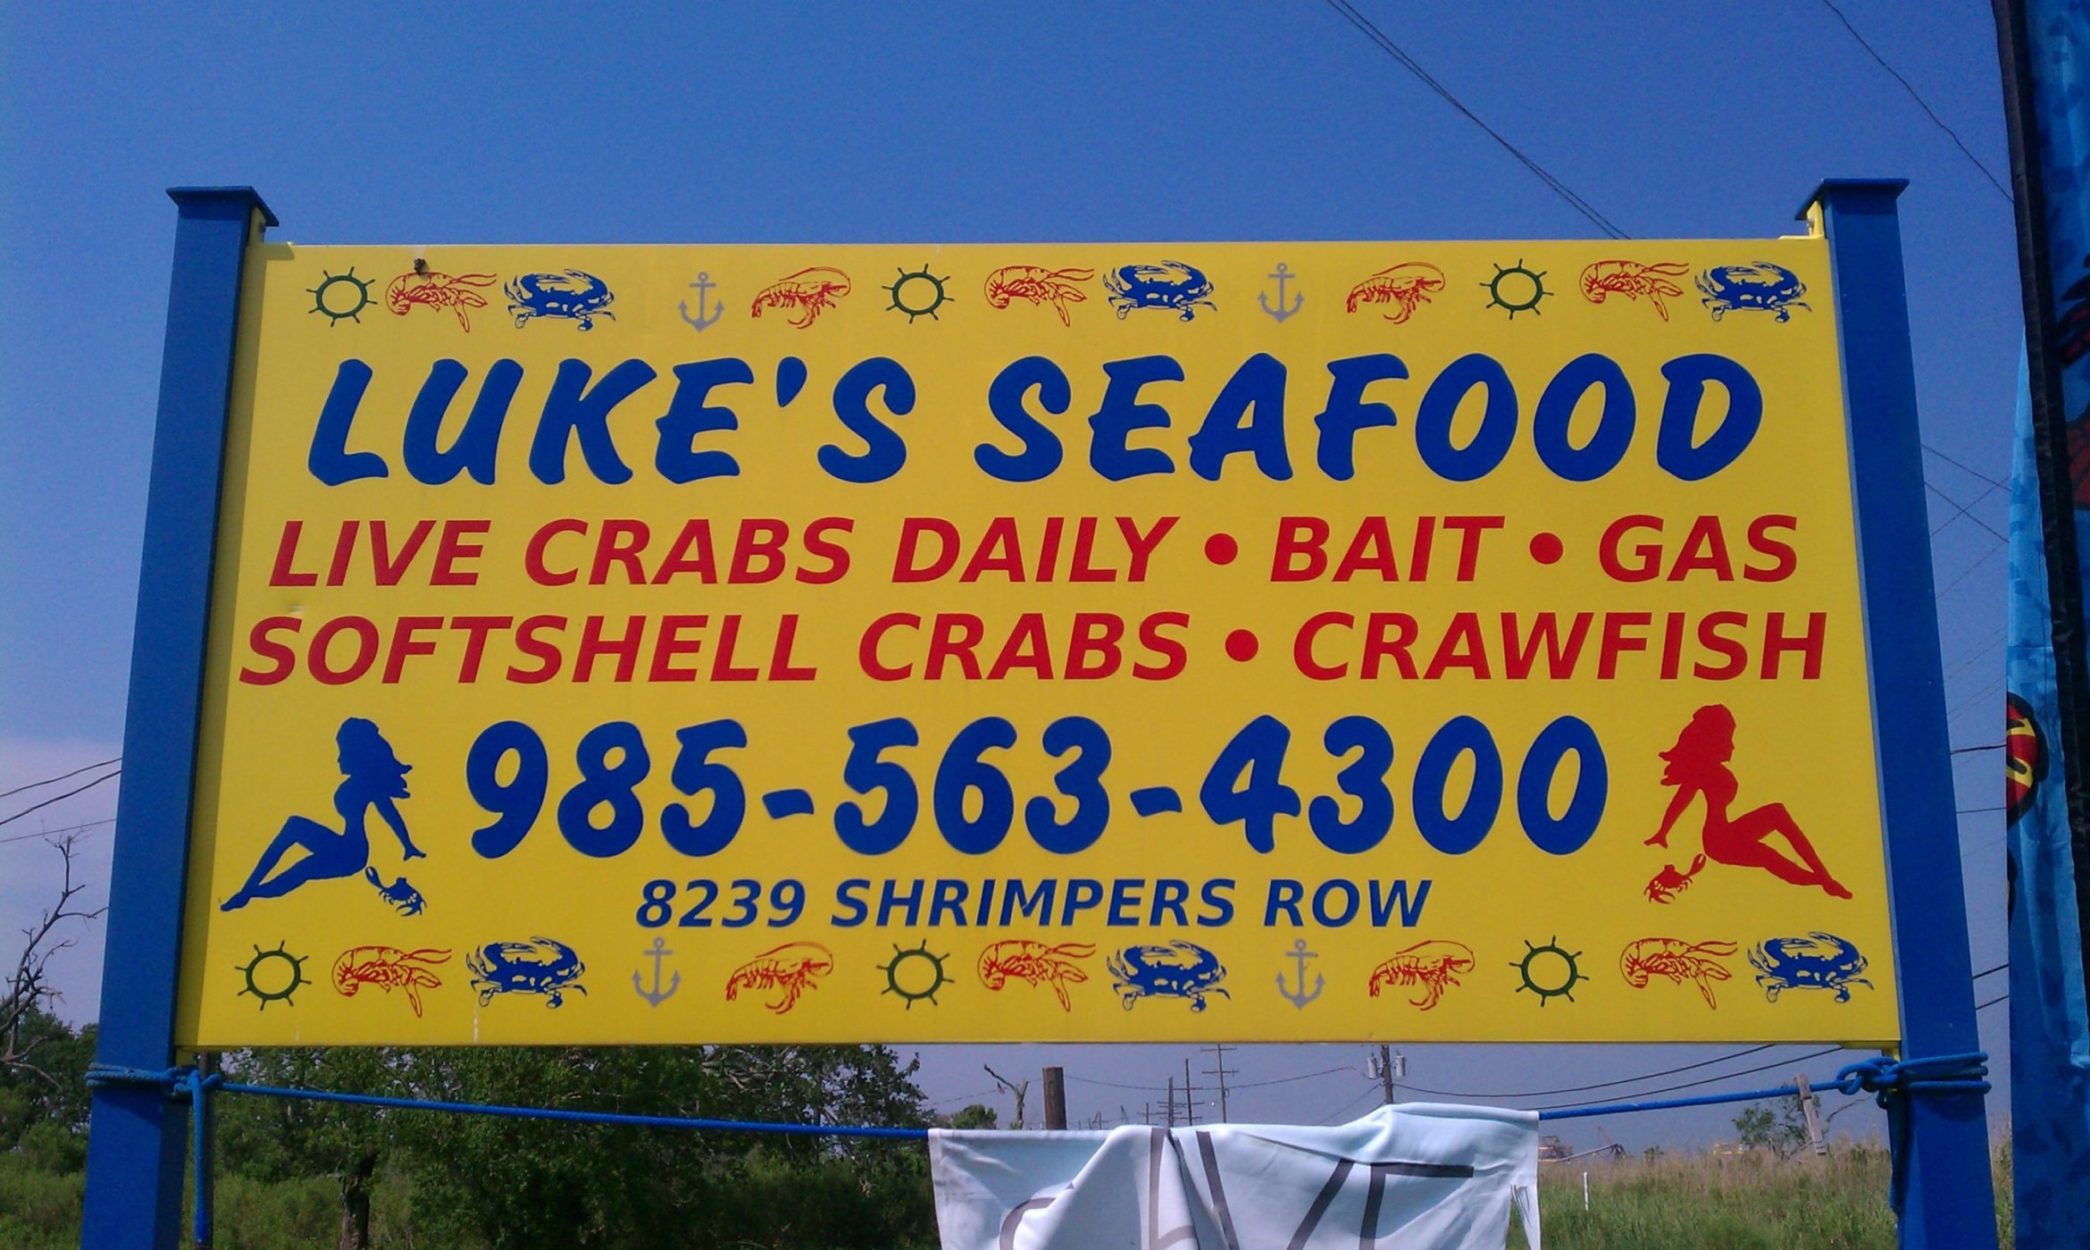 Live Louisiana Blue Crabs Daily!